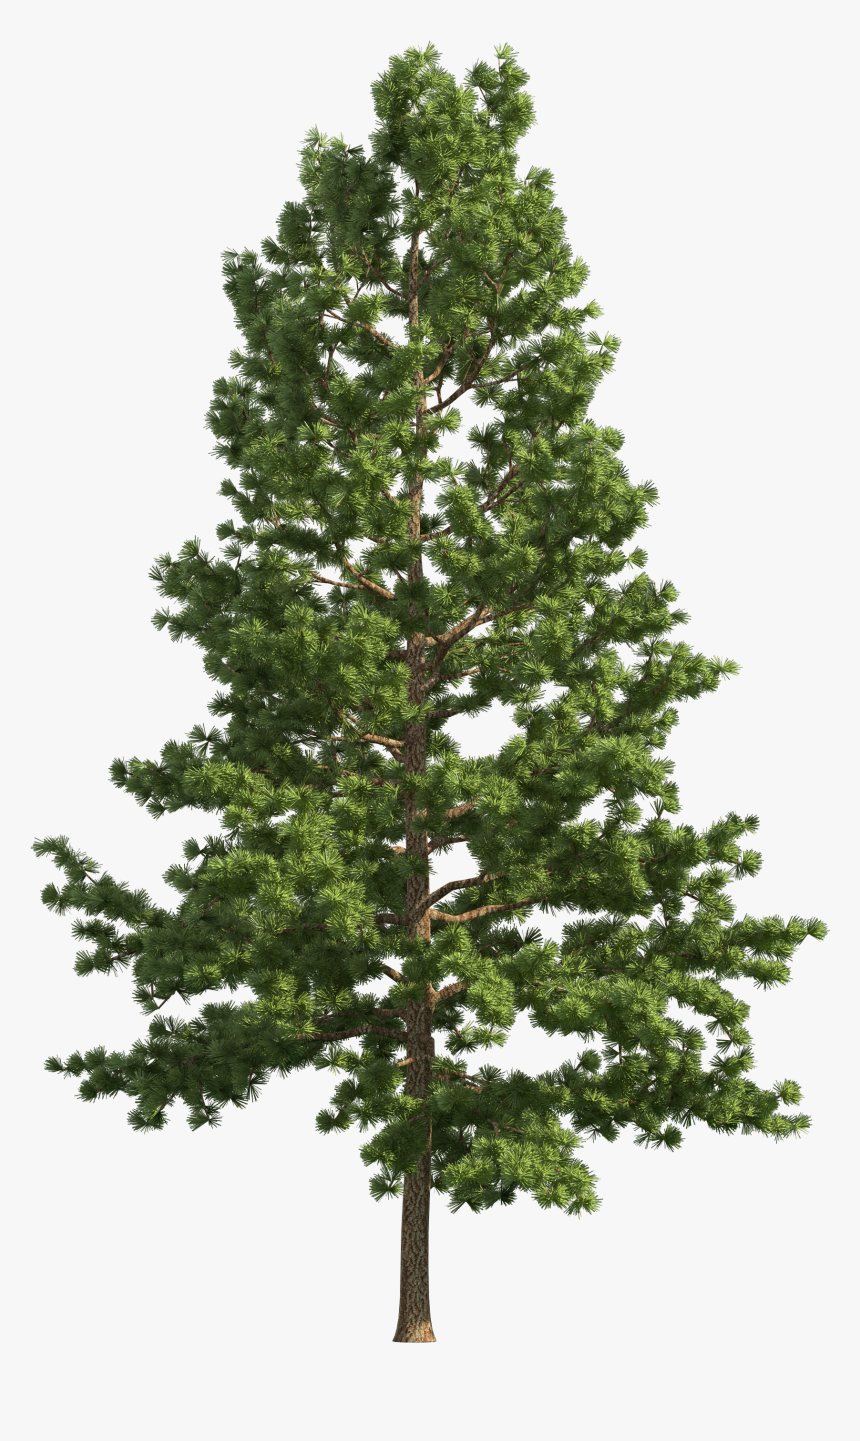 Pine Tree Png Transparent - Pine Tree Transparent Background, Png Download, Free Download